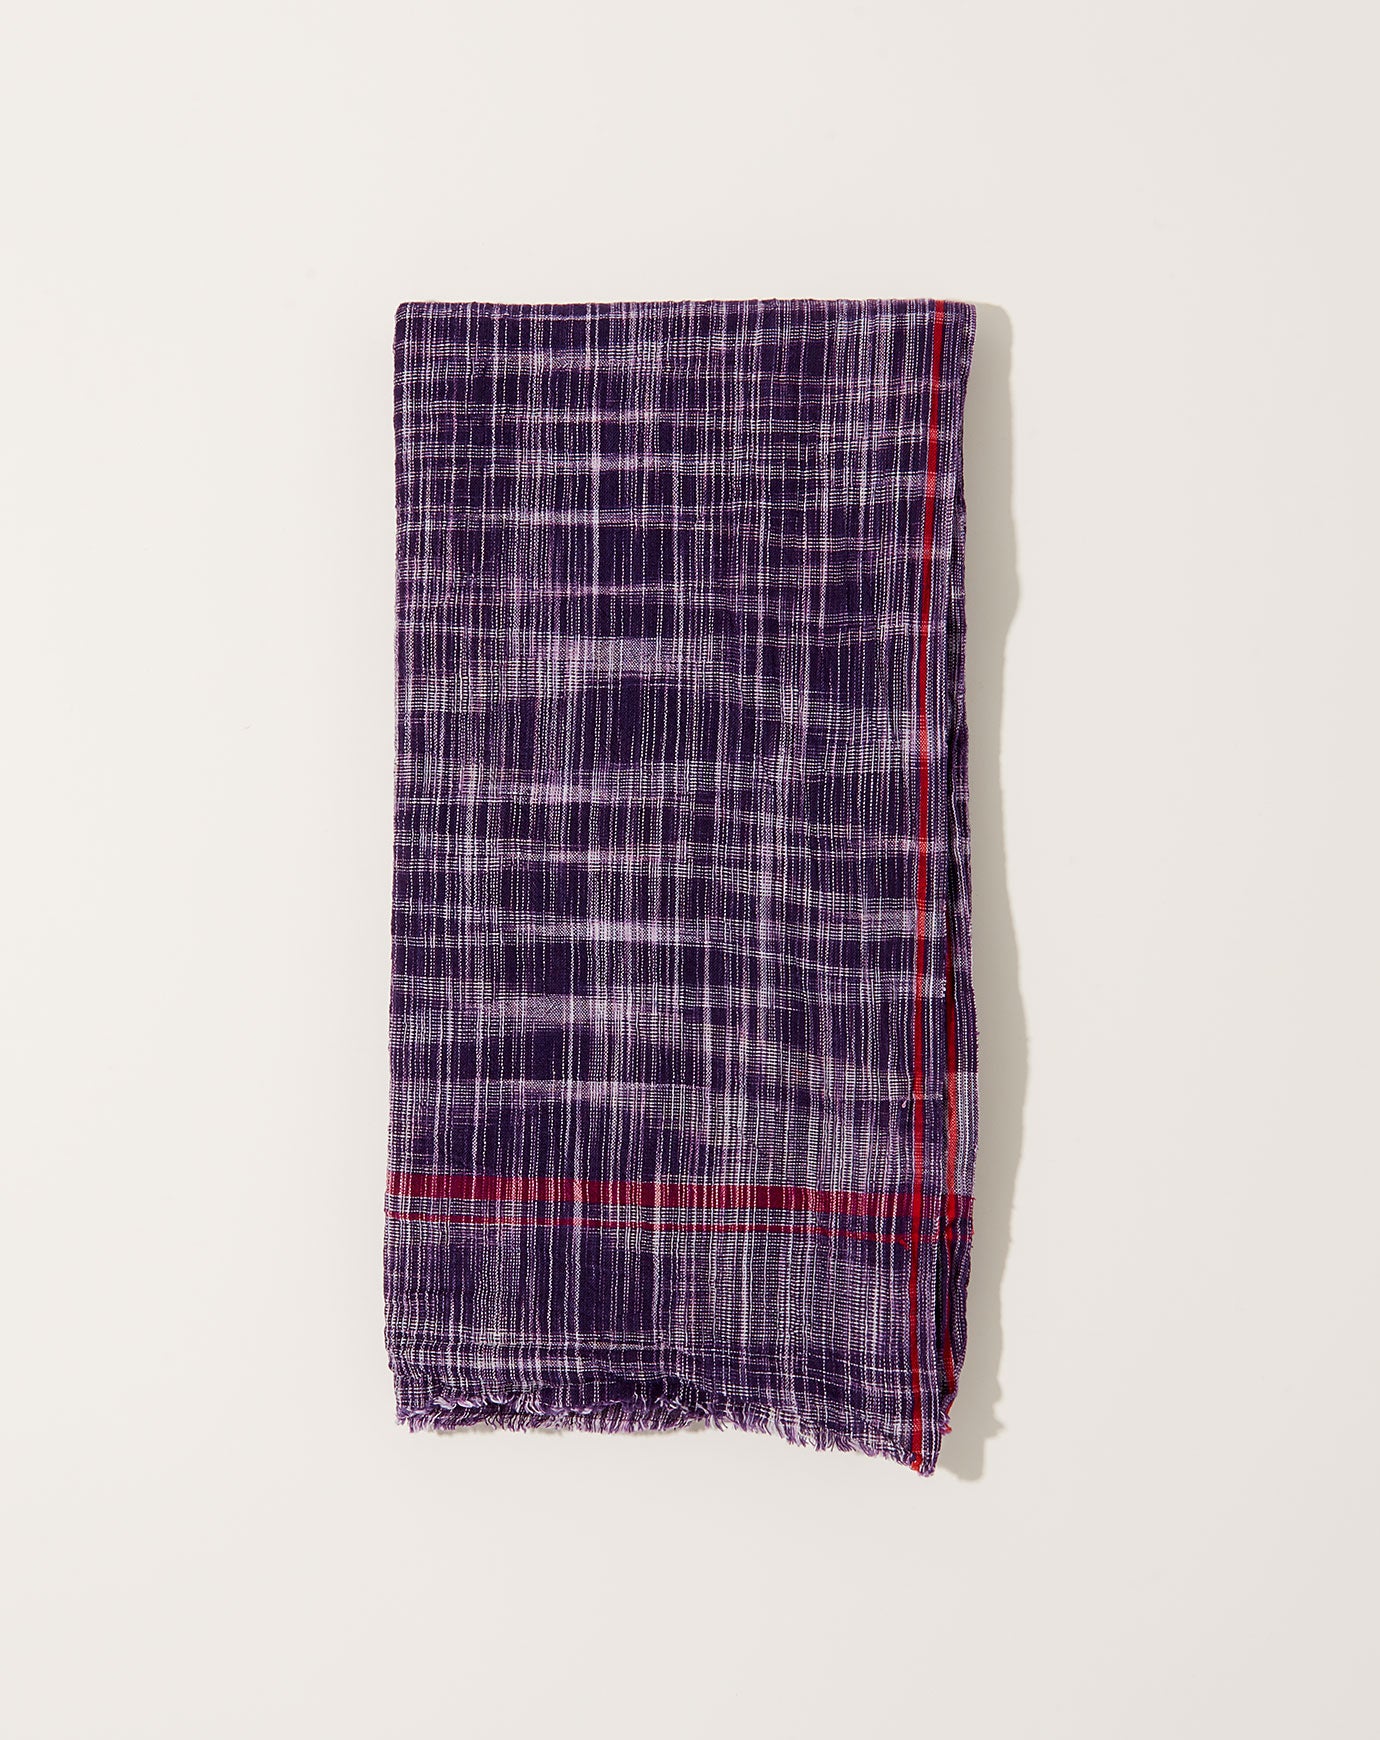 Rustic Bright Towel in Purple